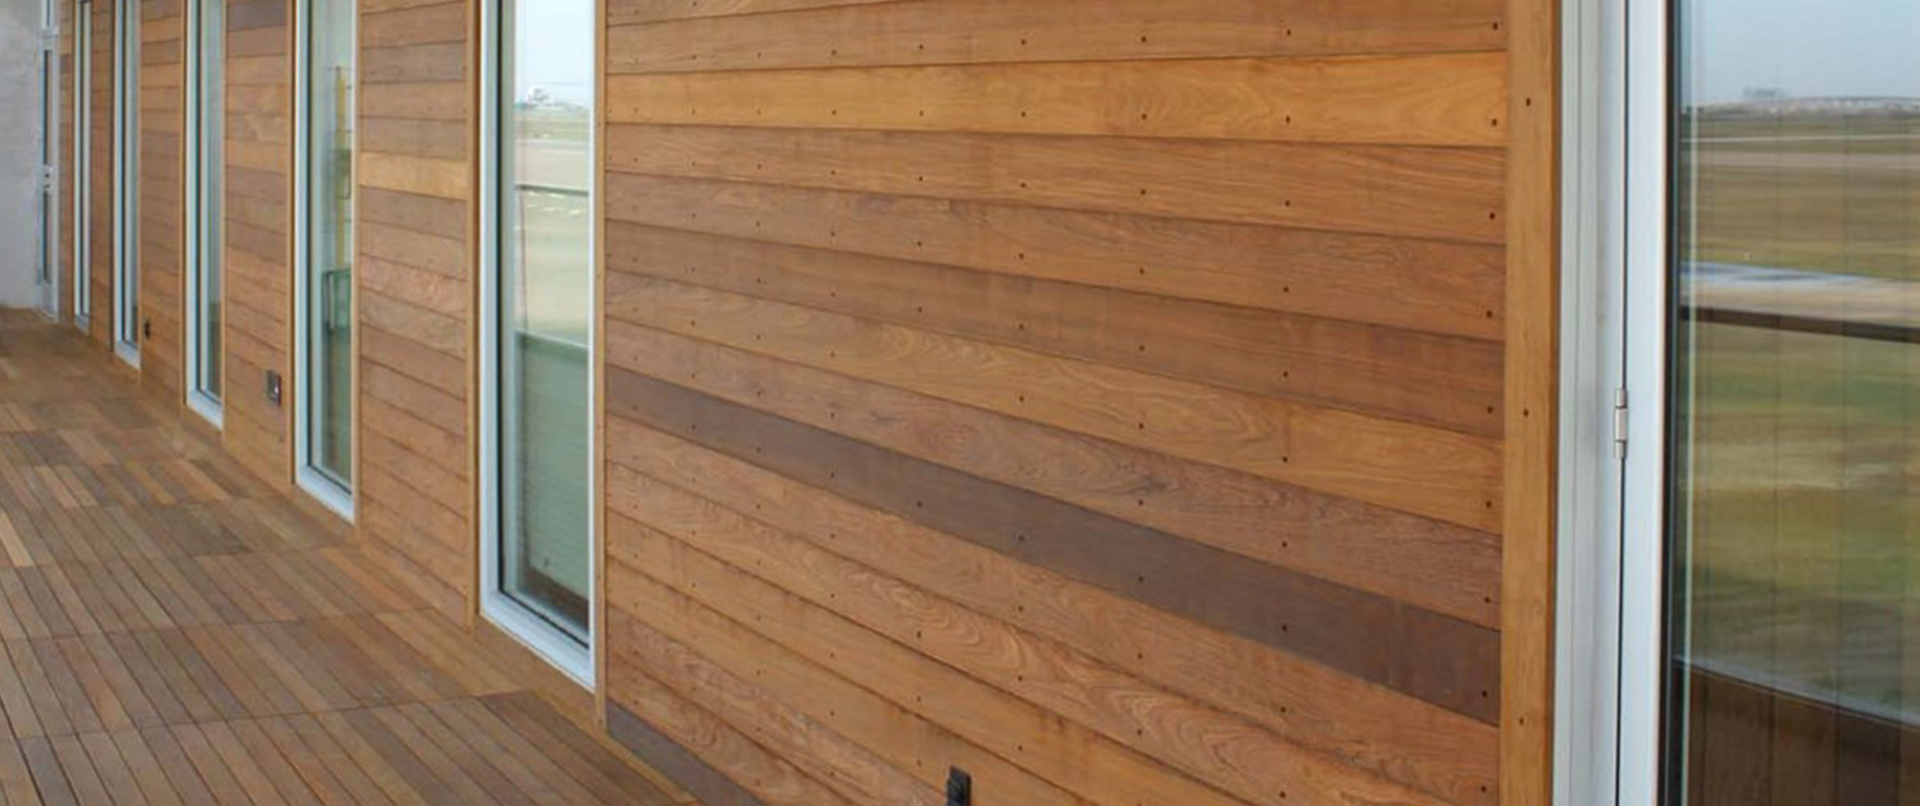 Modern Wood Tile Firehouse Deck